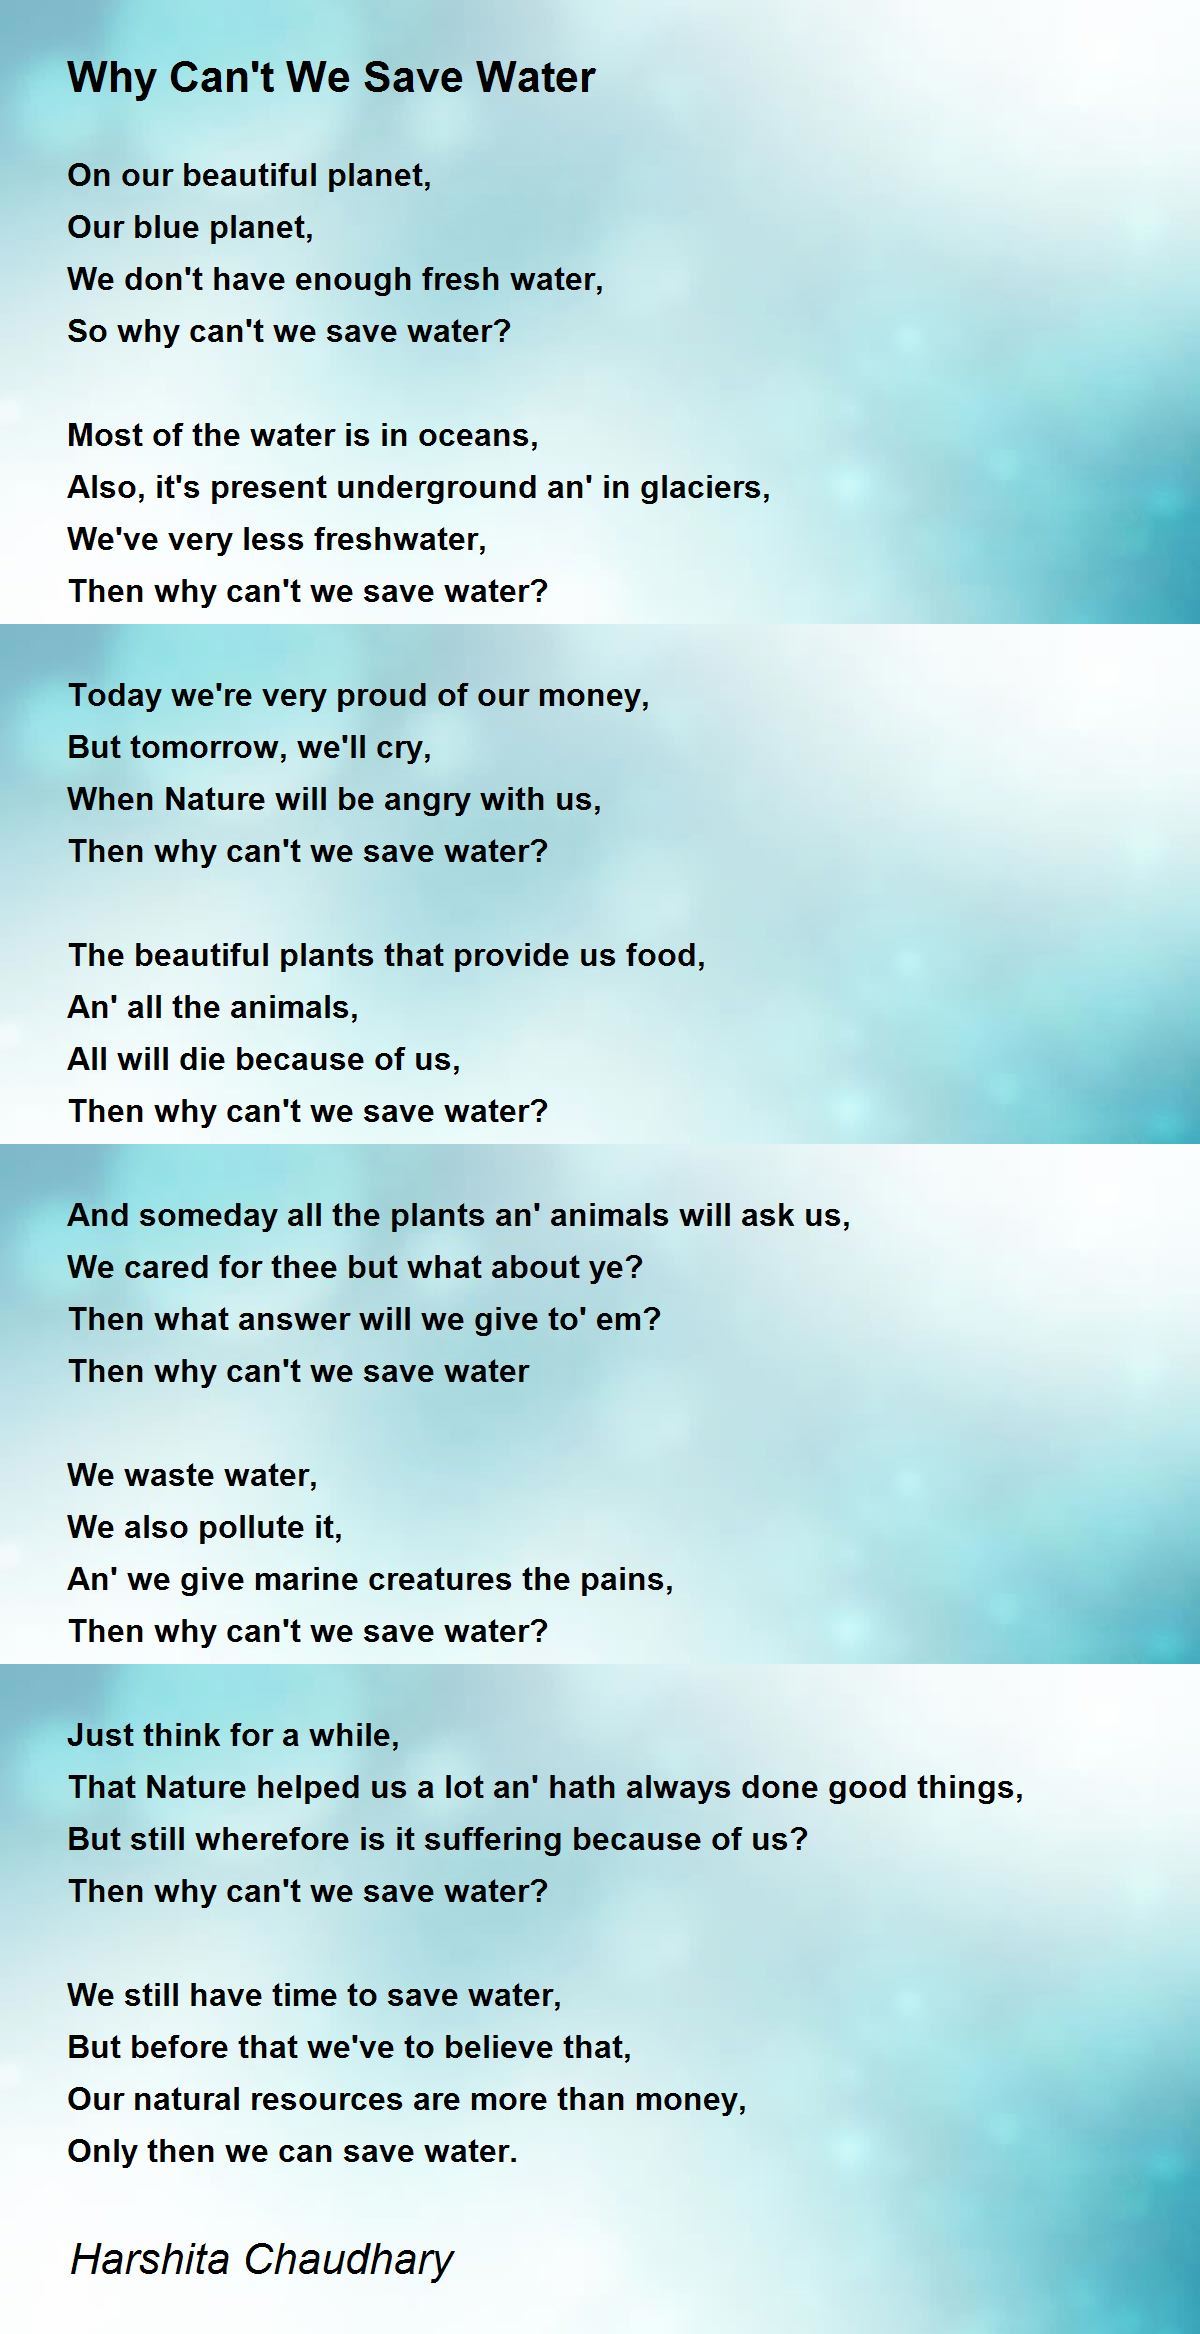 Why Can't We Save Water - Why Can't We Save Water Poem by Harshita Chaudhary